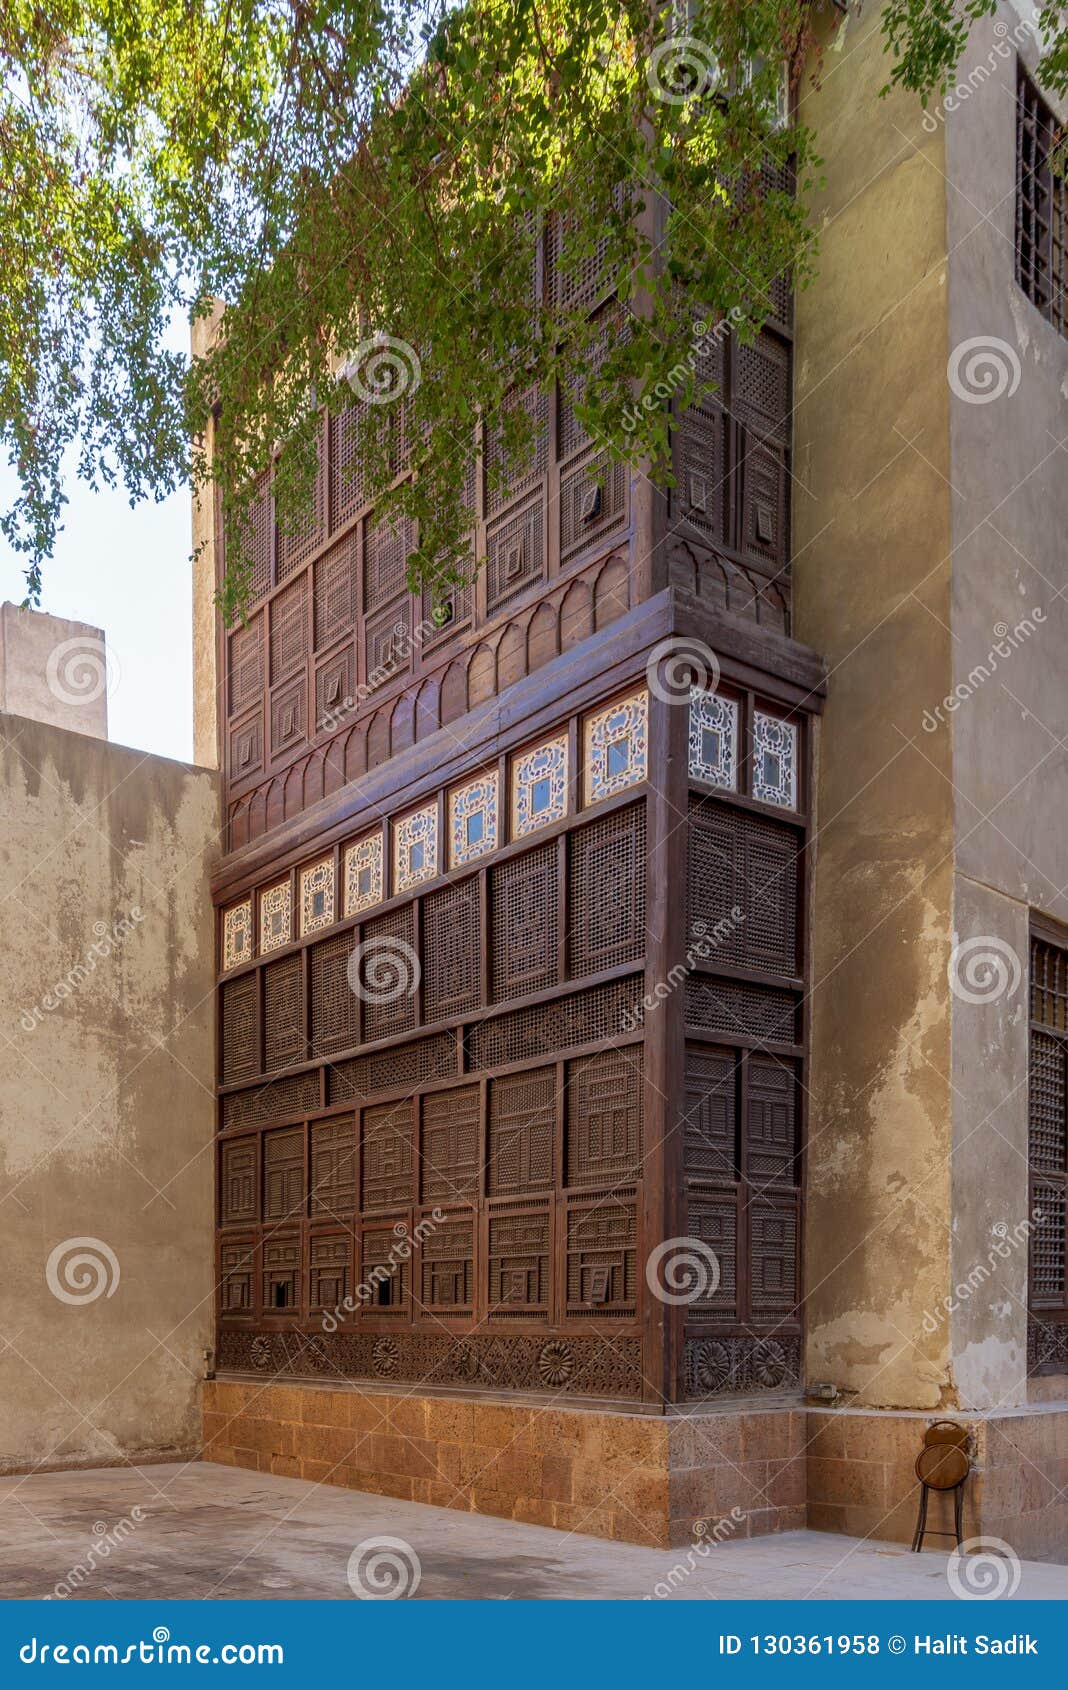 mashrabiya facade of el sehemy house, an old ottoman era historic house in medieval cairo, egypt, originally built in 1648